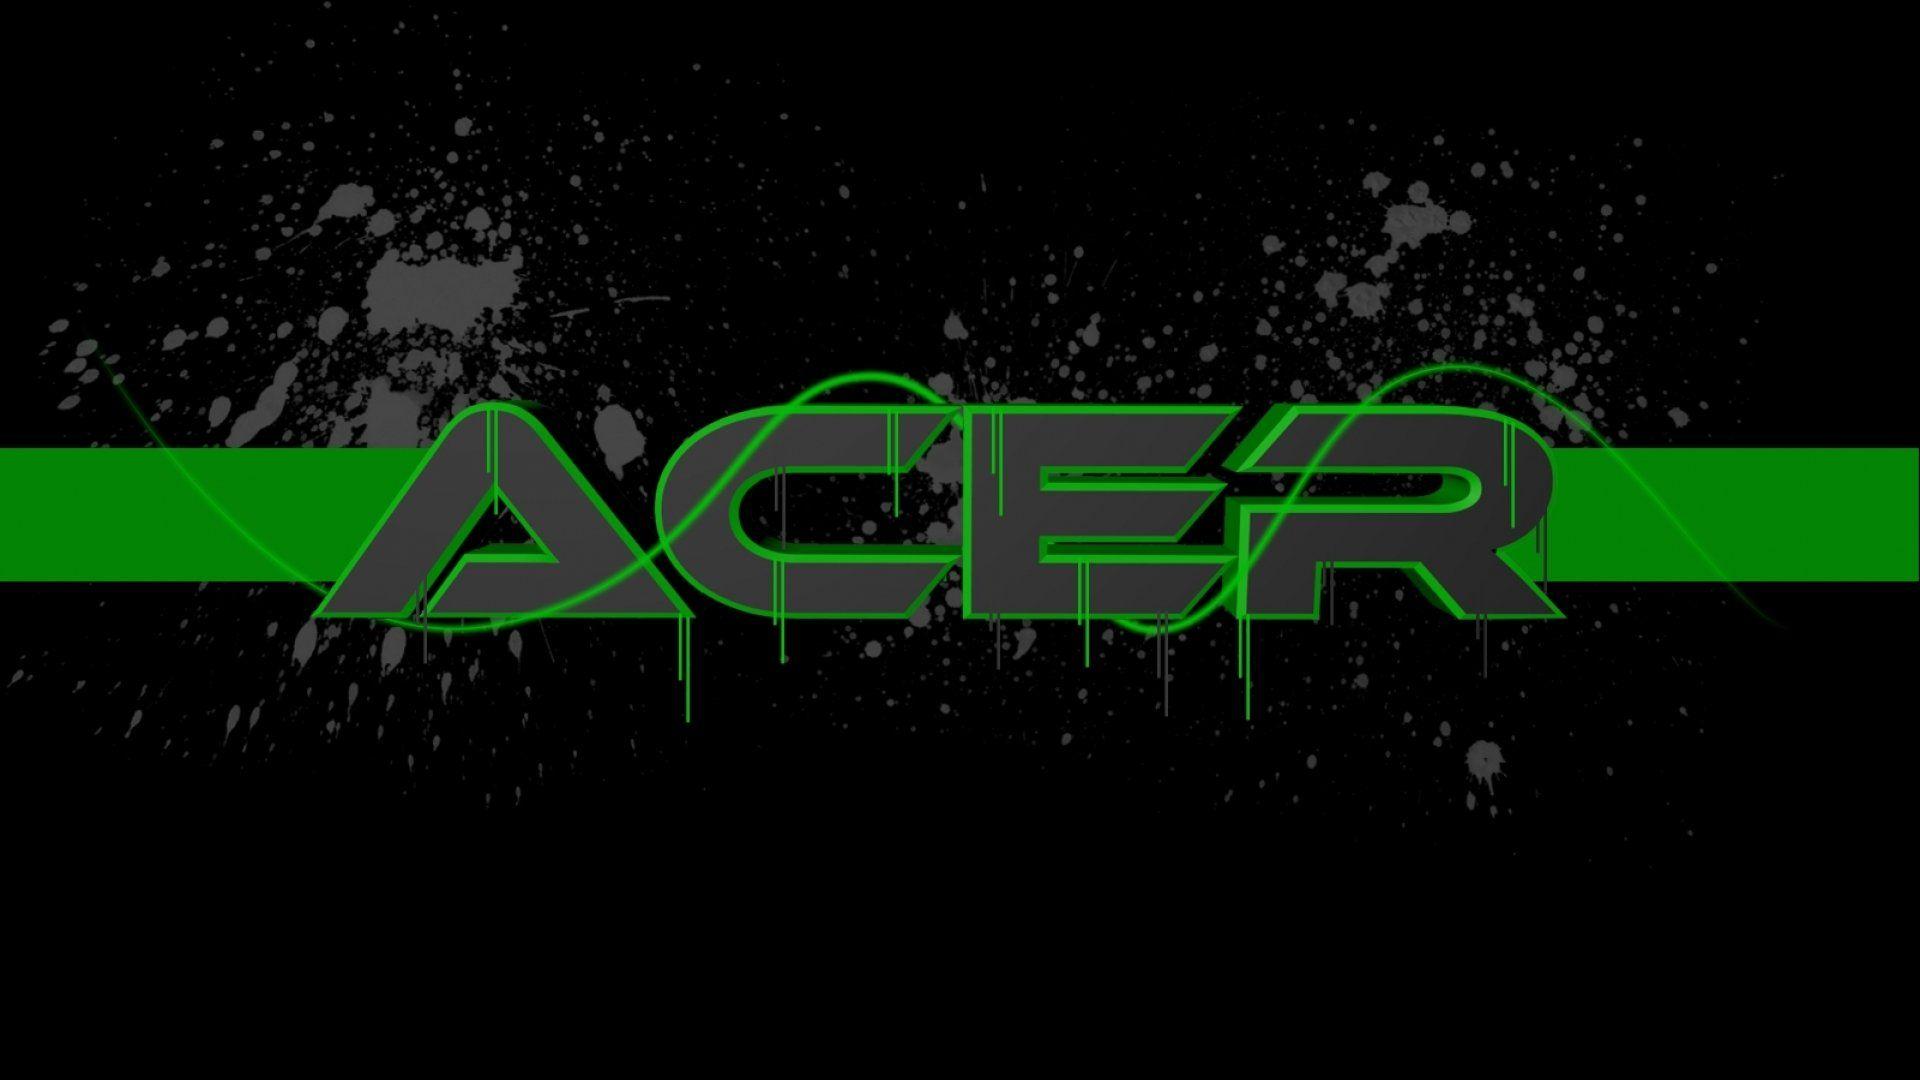 Acer Predator Wallpapers - Wallpaper Cave